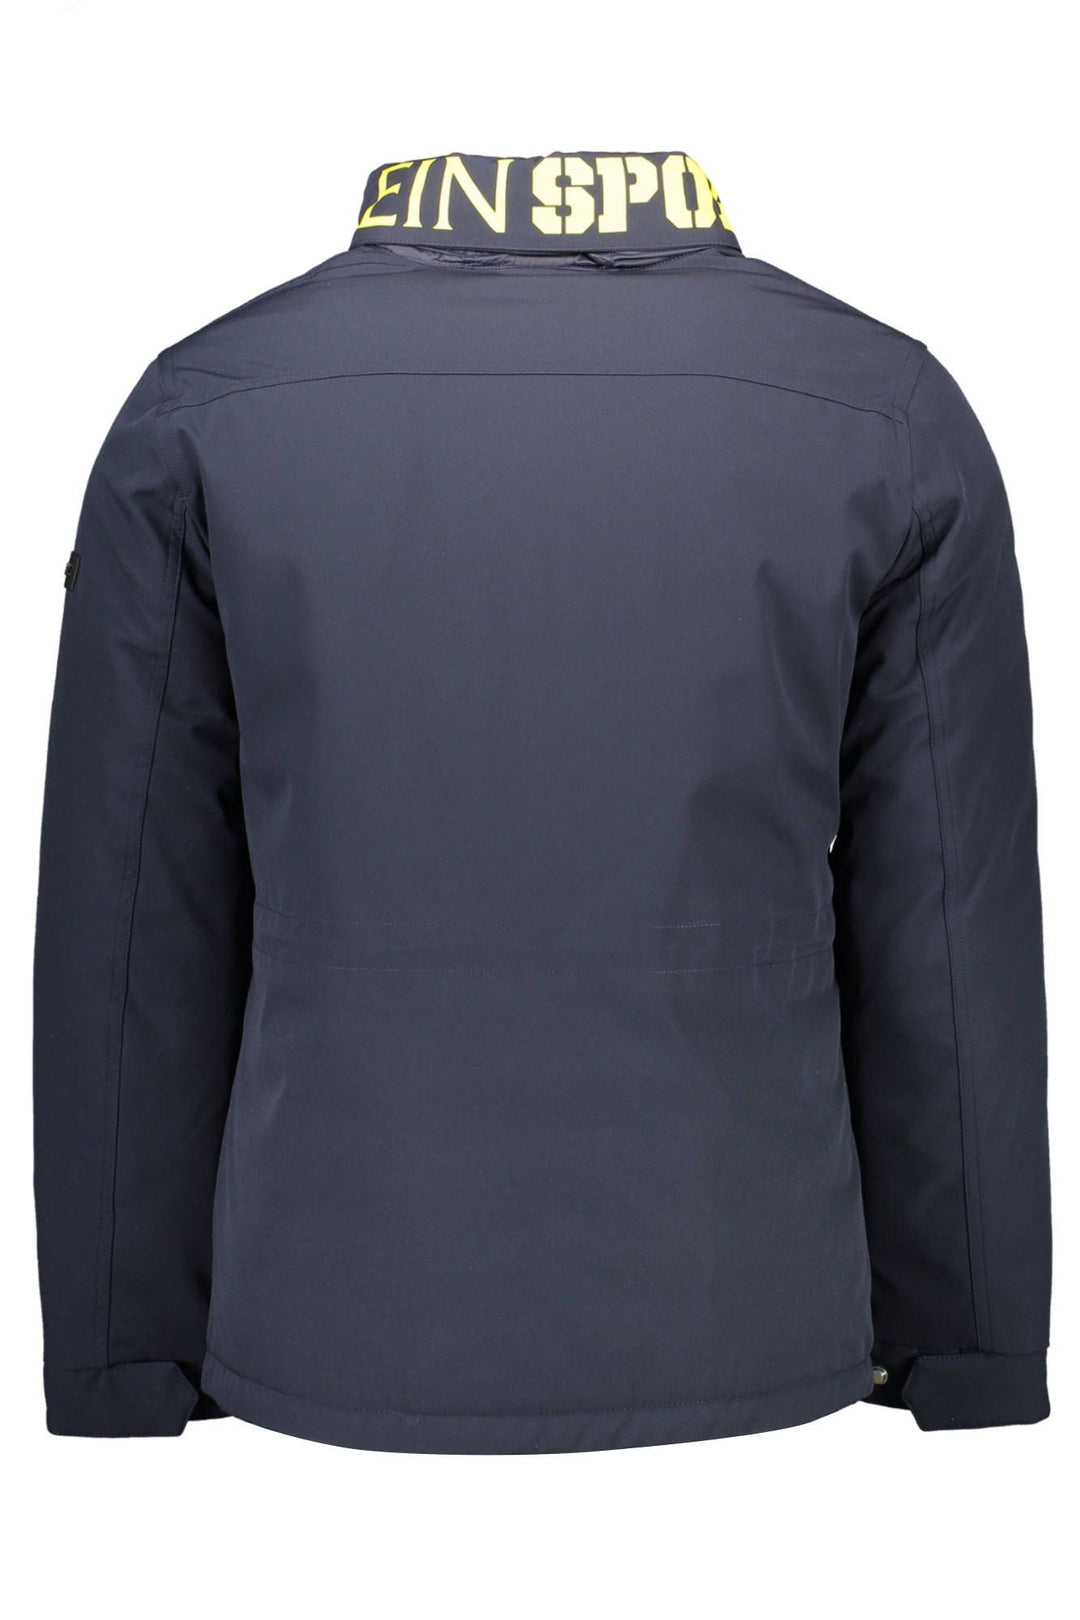 Plein Sport Sleek Long-Sleeved Designer Jacket